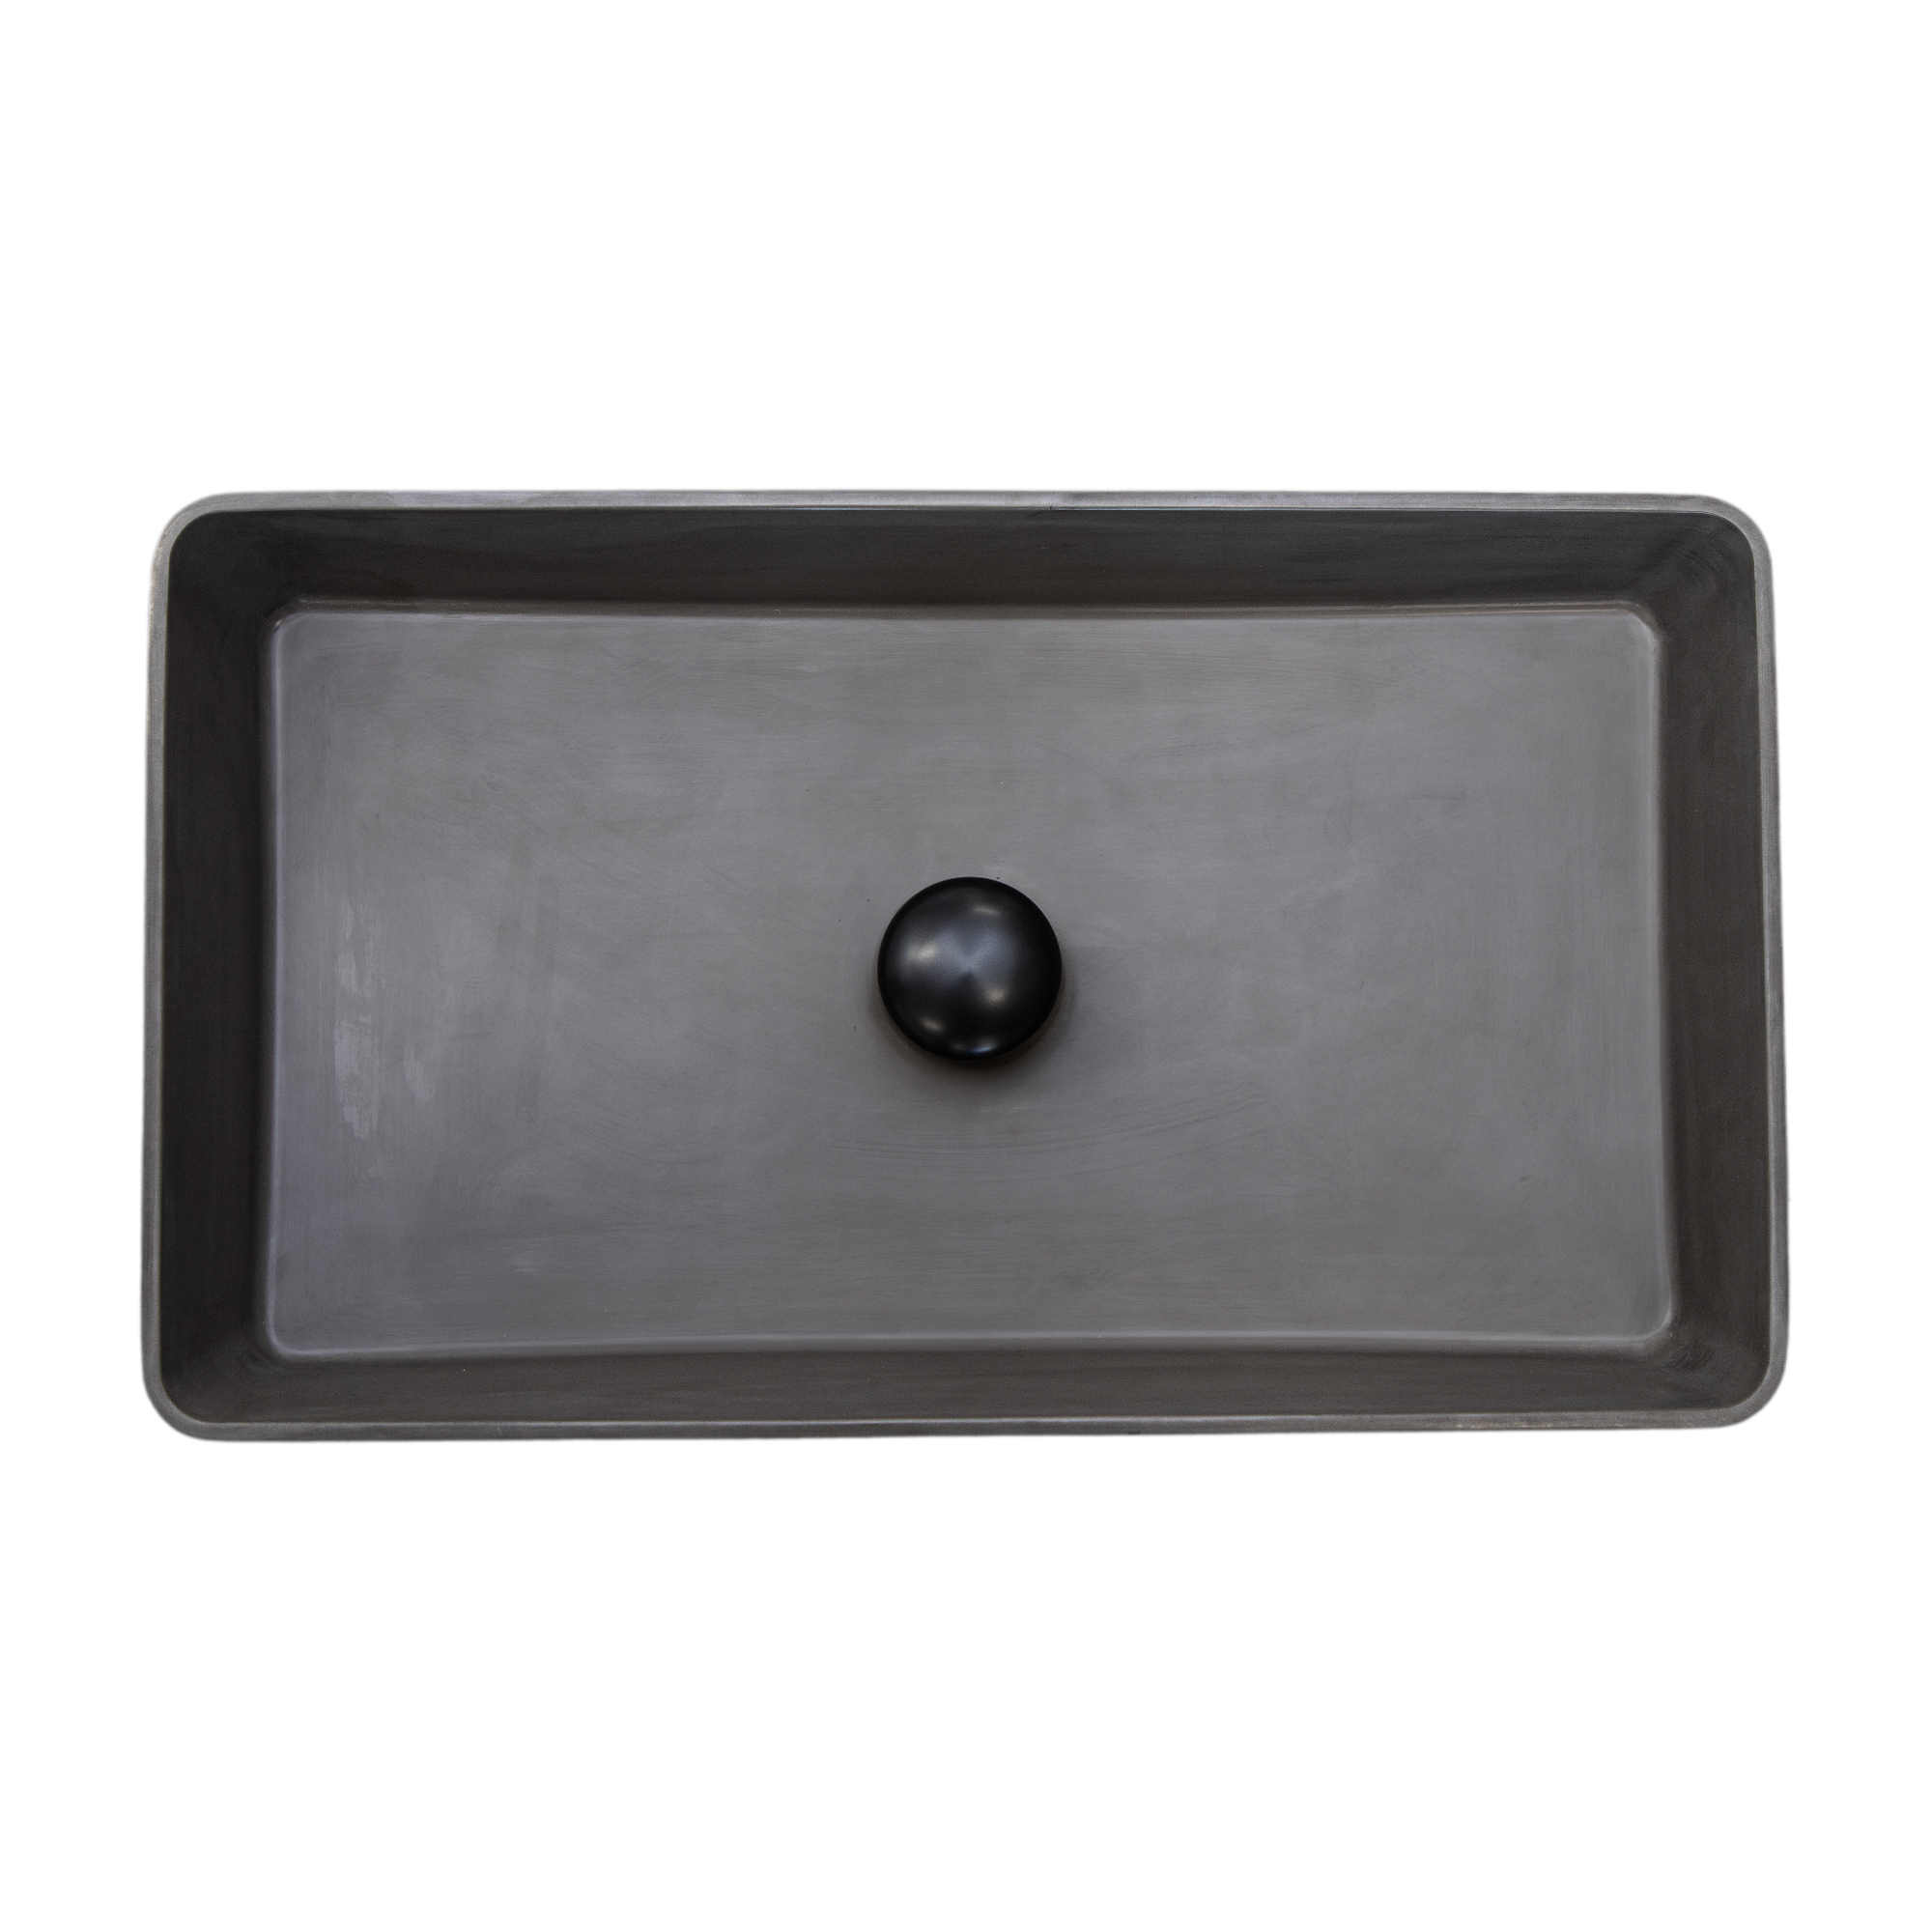 THH Above Counter Ceramic Bathroom Basin Dark Gray 605x350x110mm